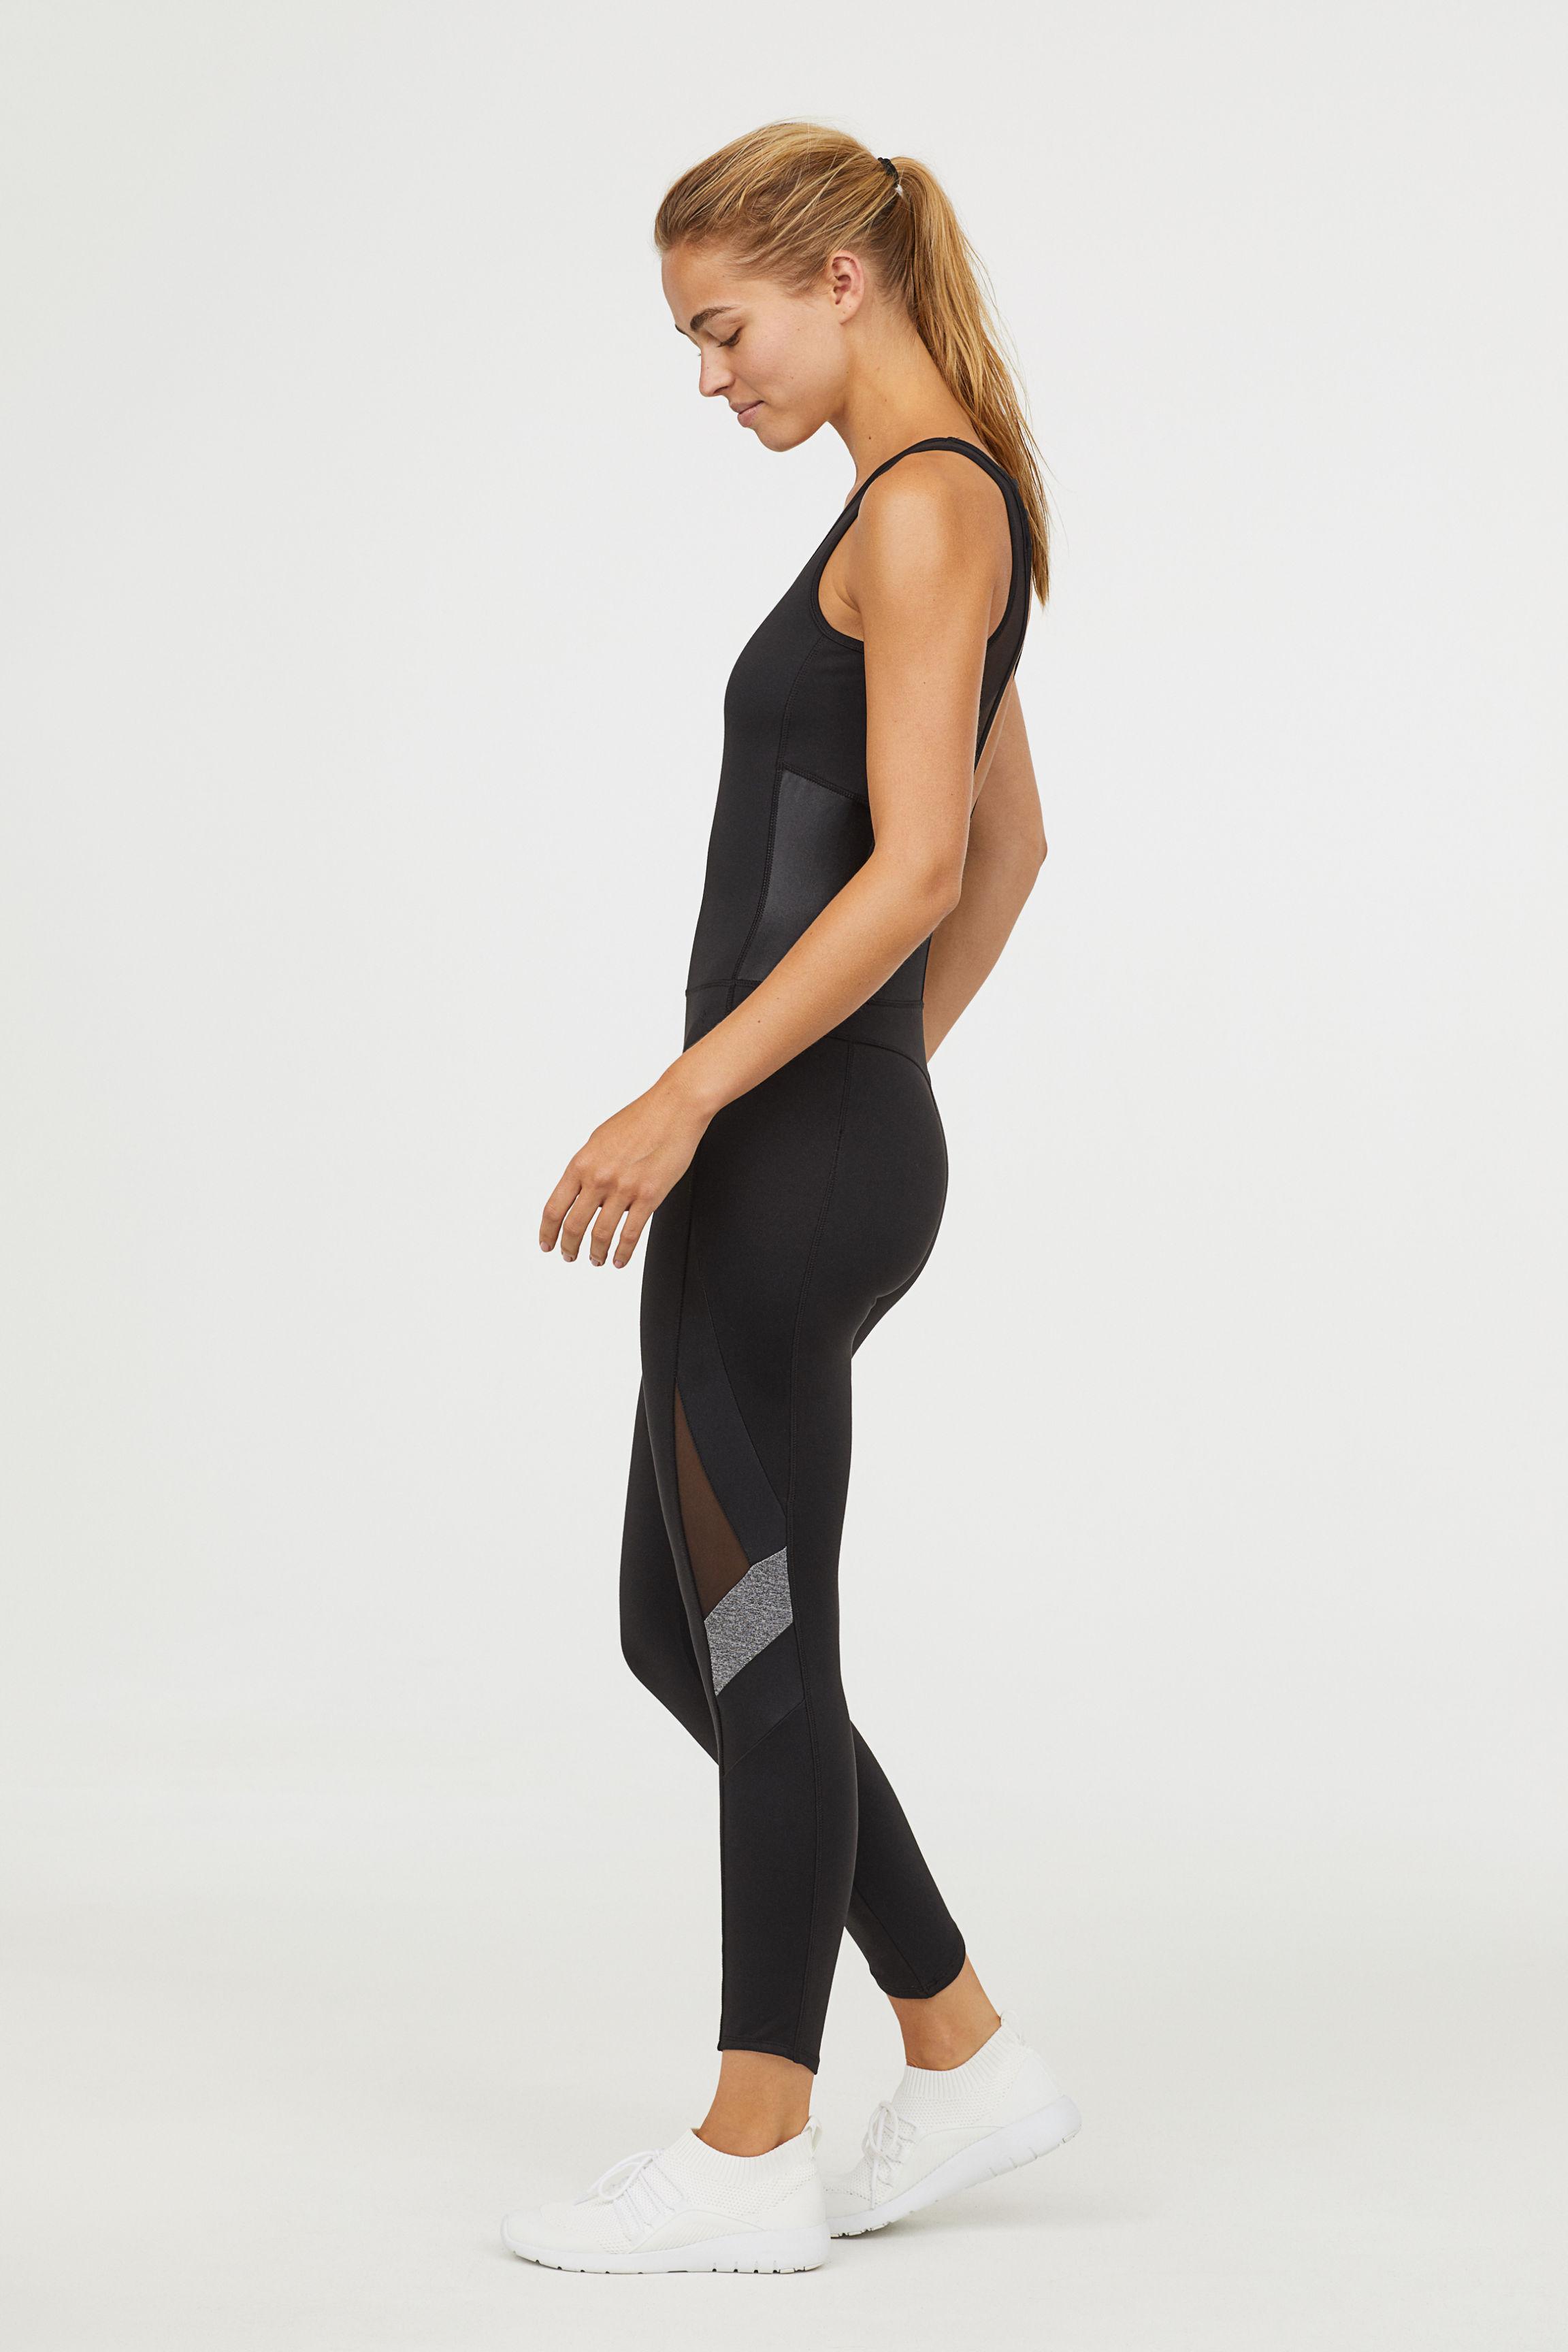 H&M Sports Jumpsuit in Black | Lyst